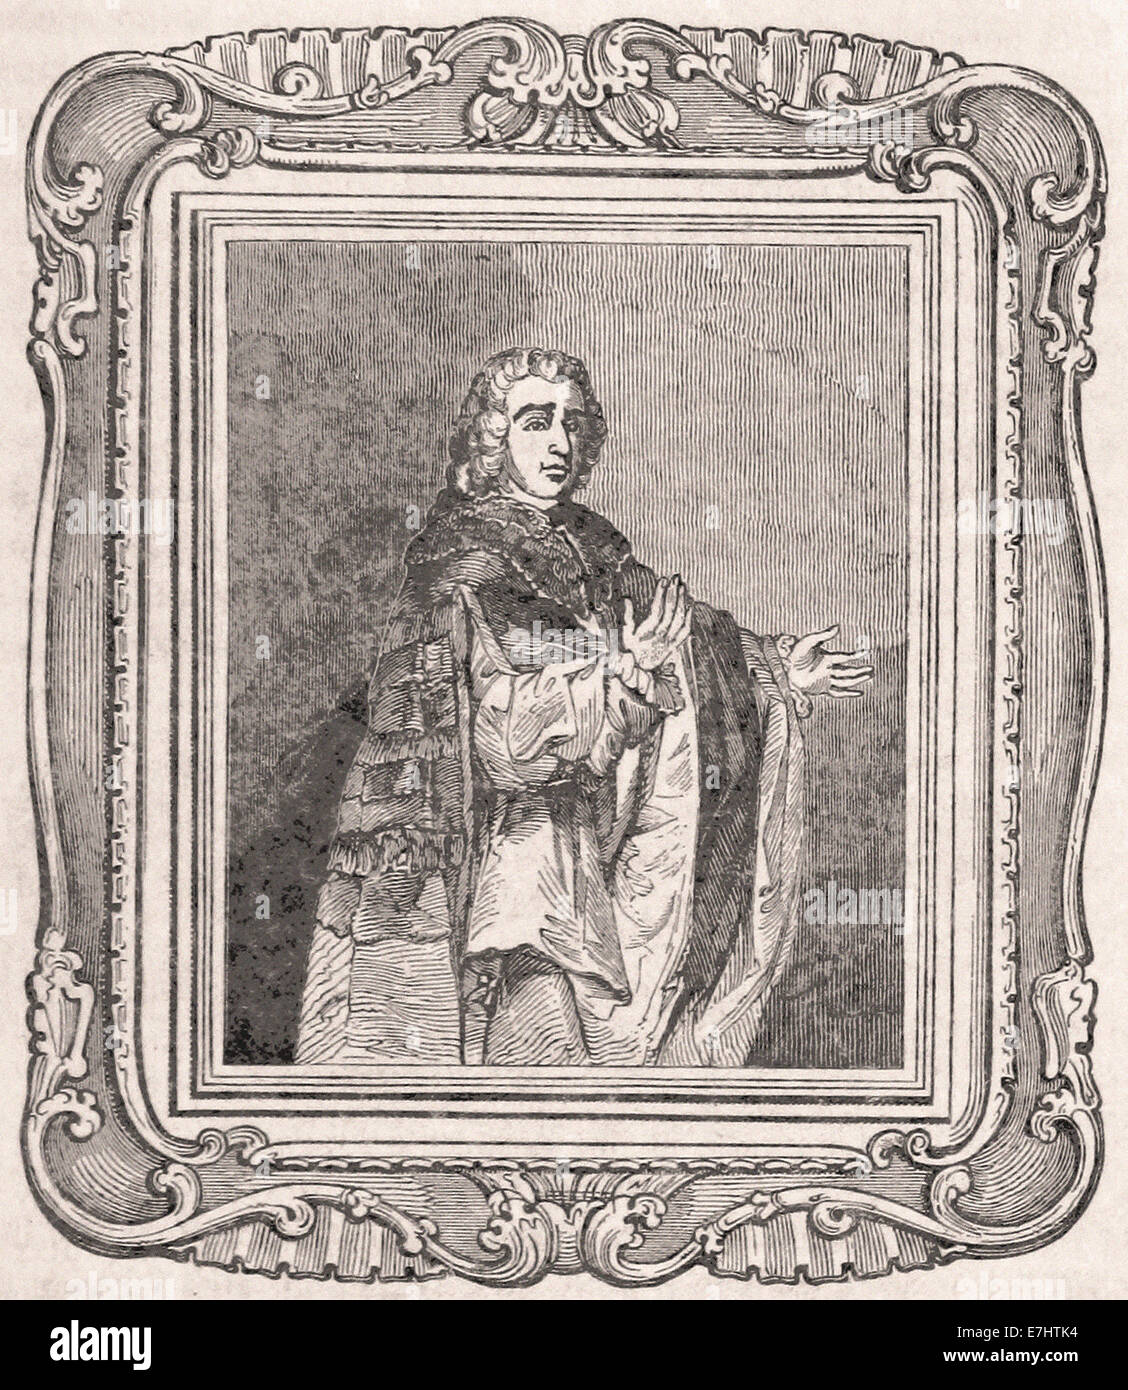 Porträt von William Pitt, Earl of Chatham - Gravur - XIX. Jahrhundert Stockfoto